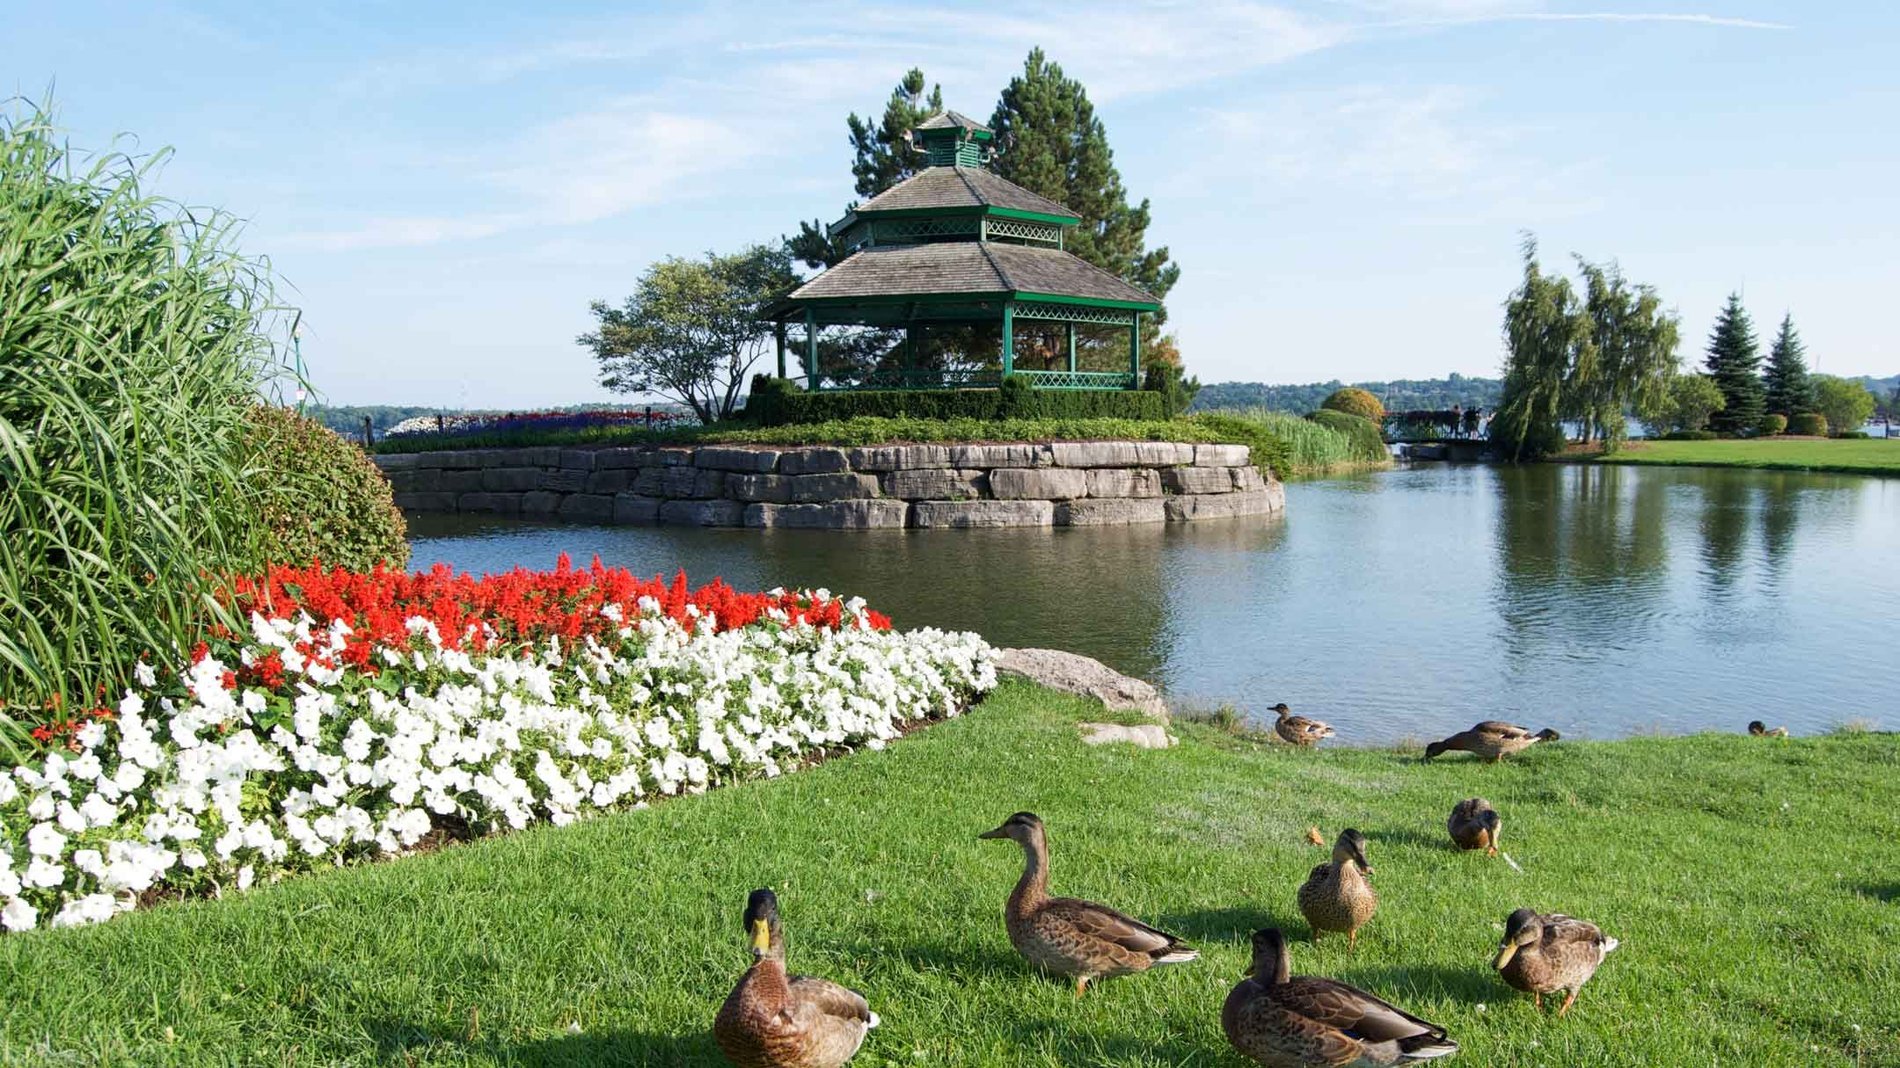 Ducks by a garden pond in Barrie, Ontario